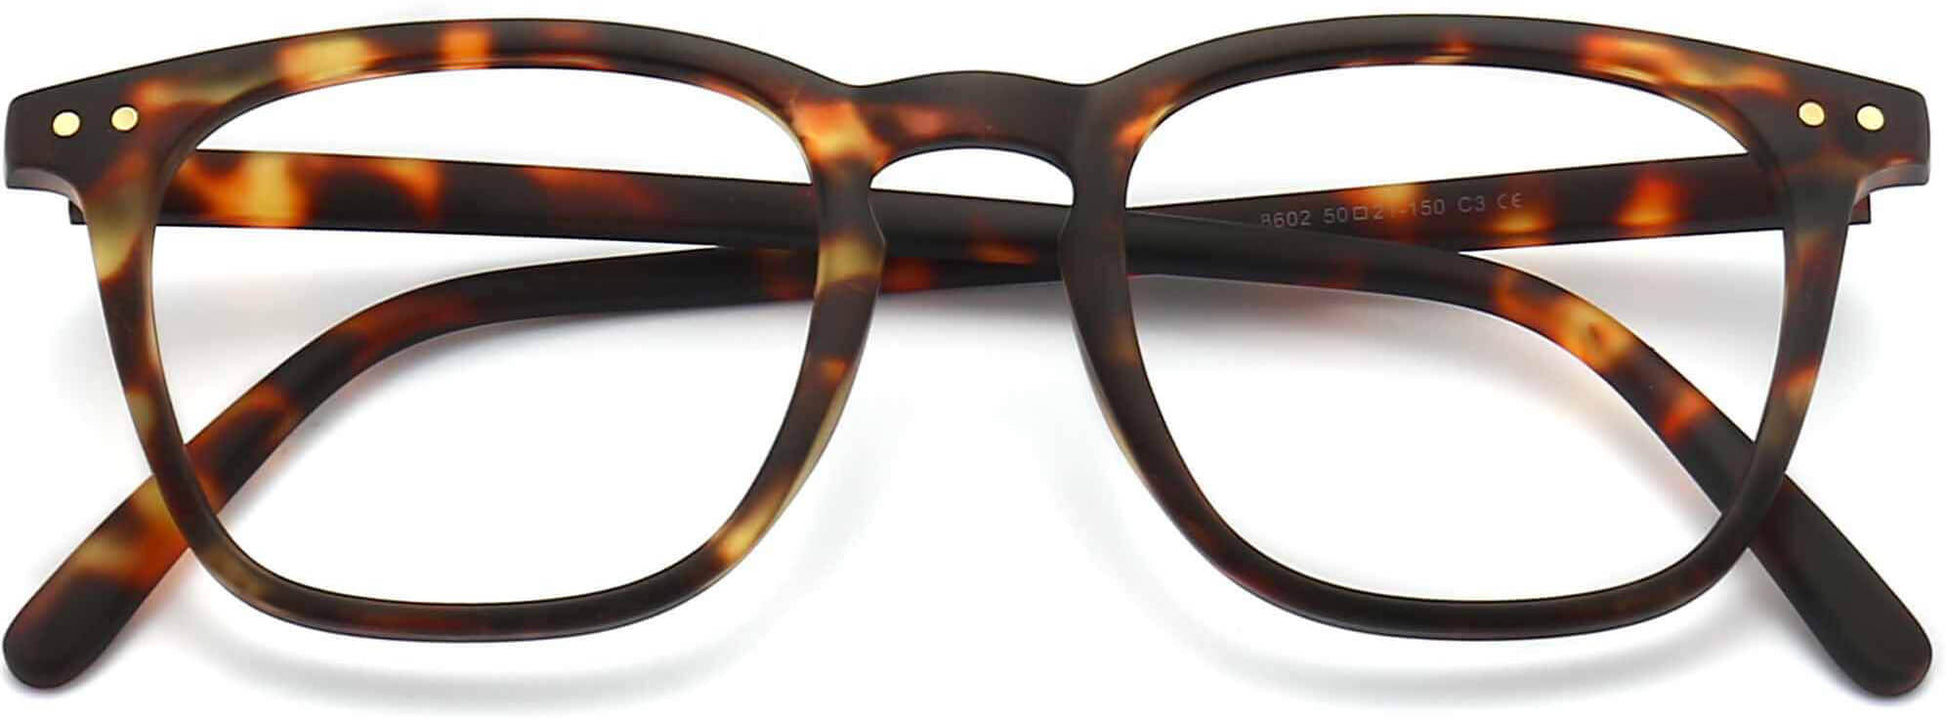 Barrett Square Tortoise Eyeglasses from ANRRI, closed view